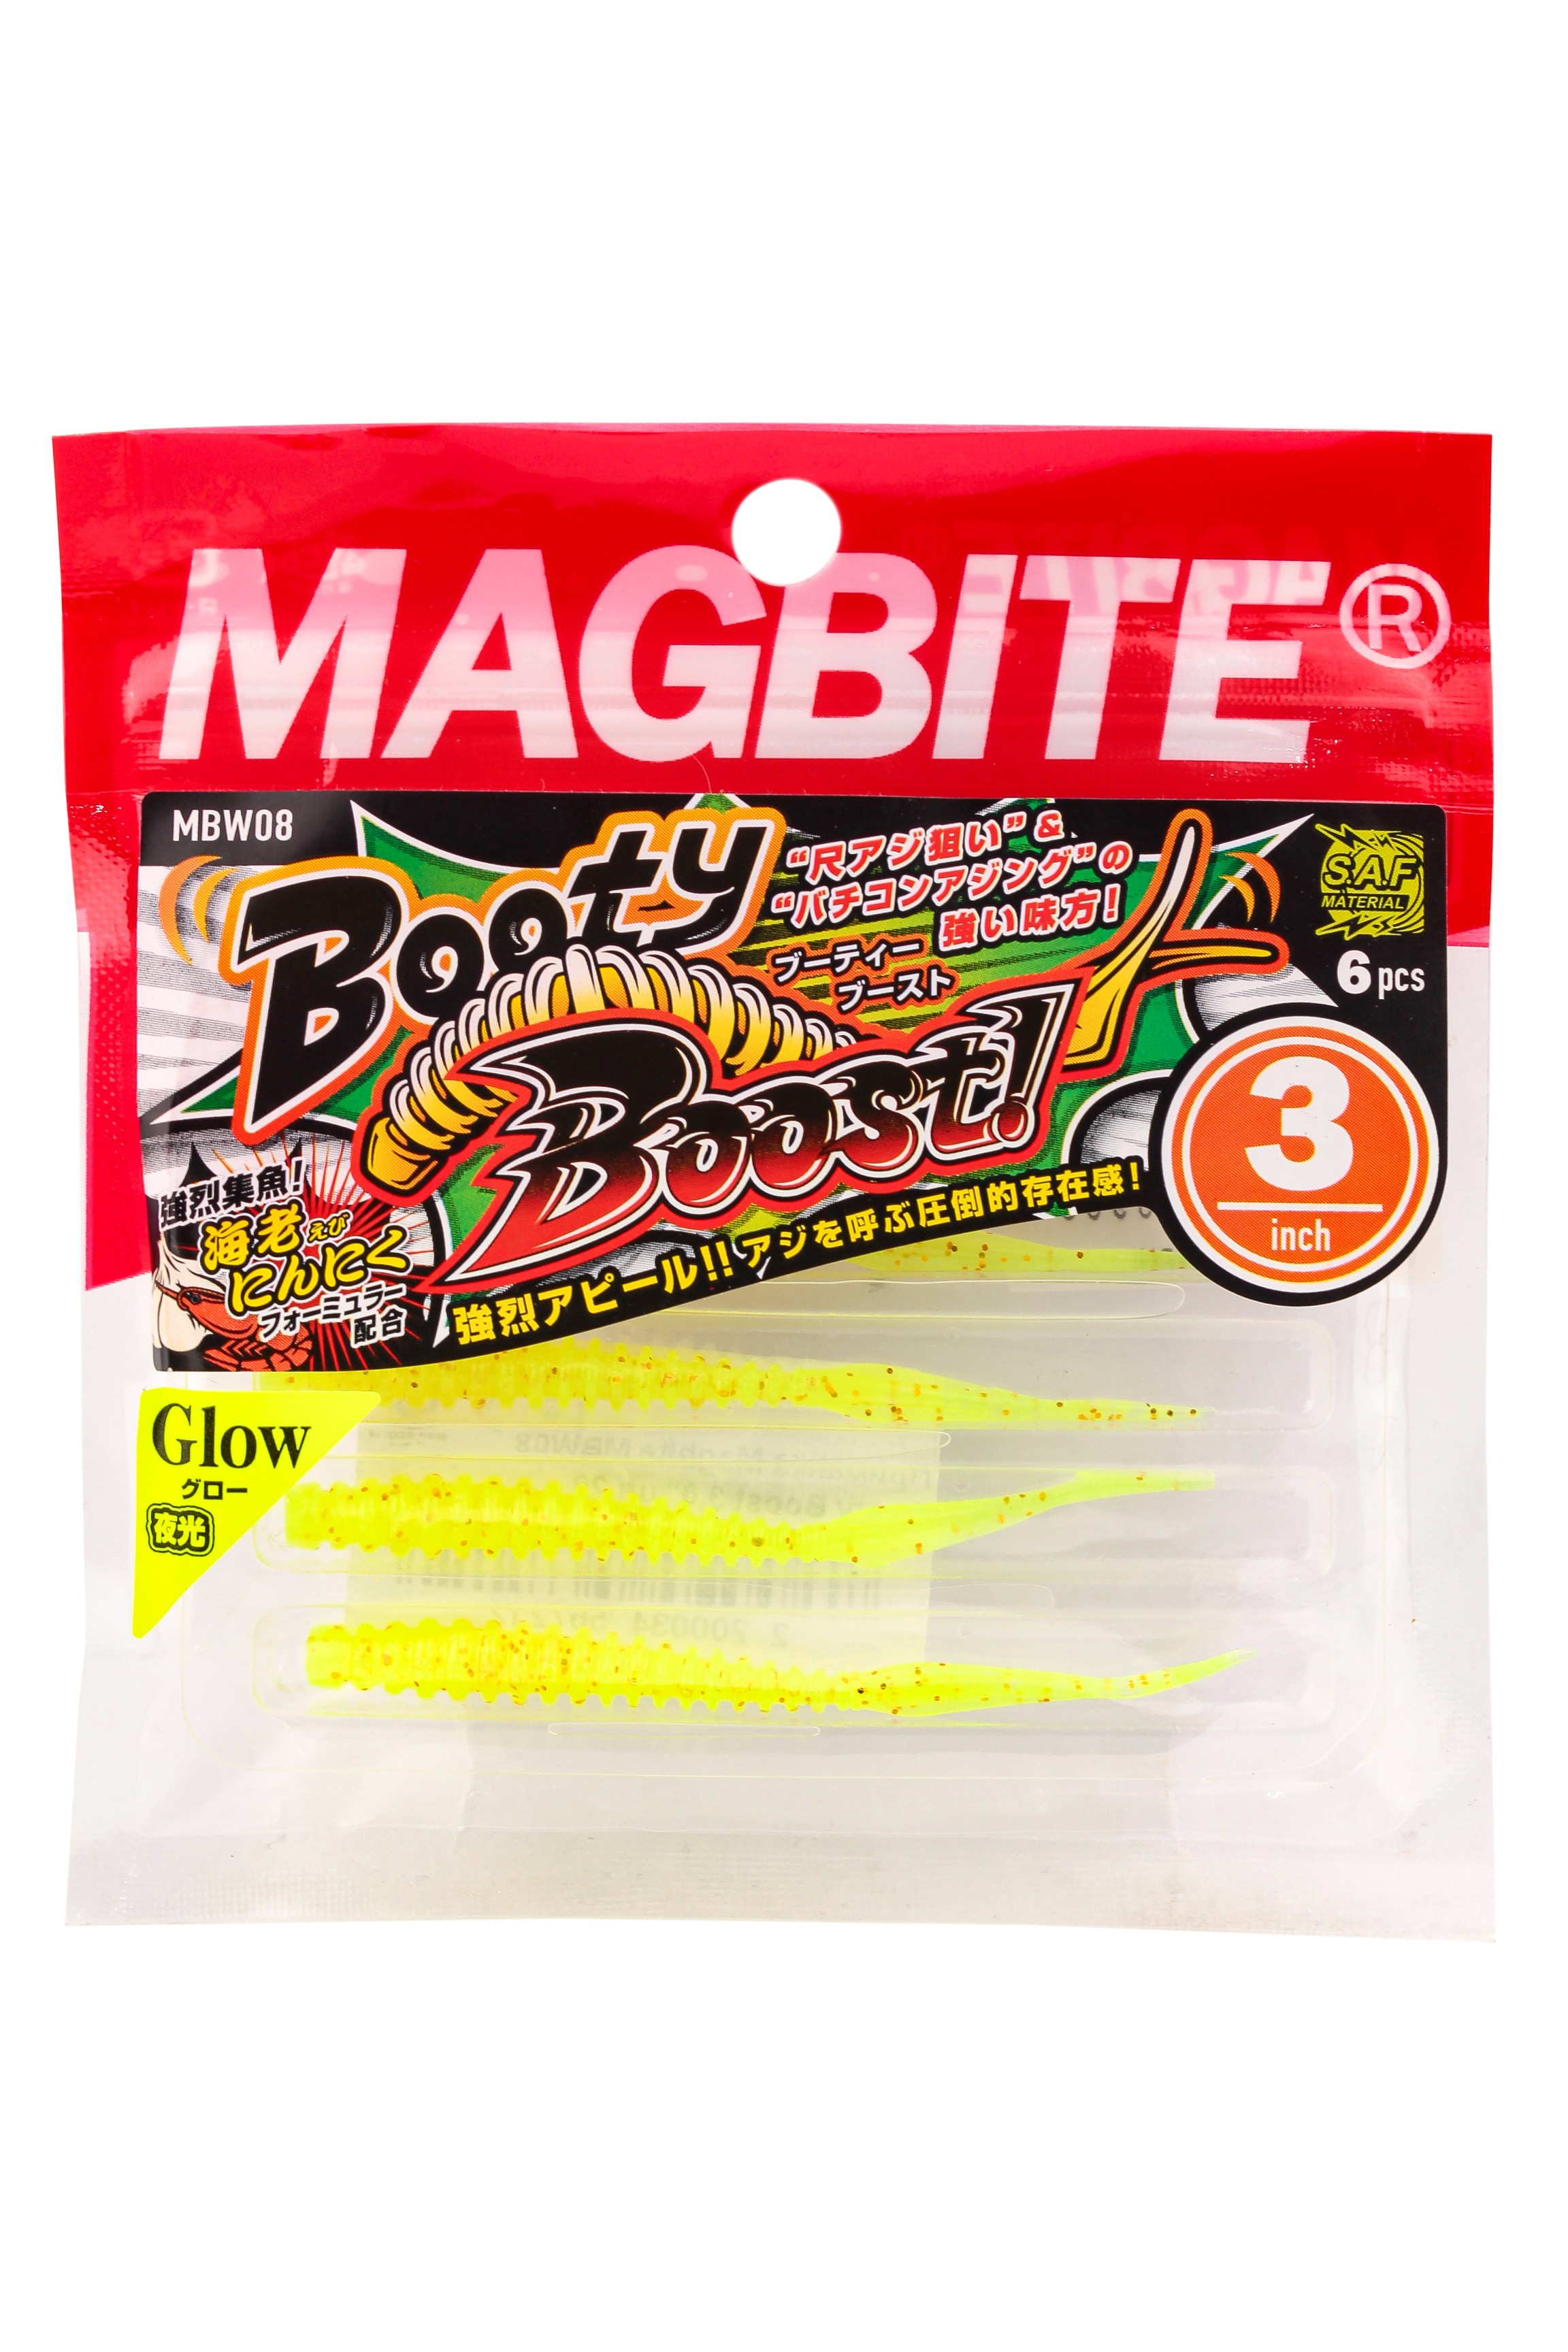 Приманка Magbite MBW08 Booty Boost 3,0" цв.20 - фото 1